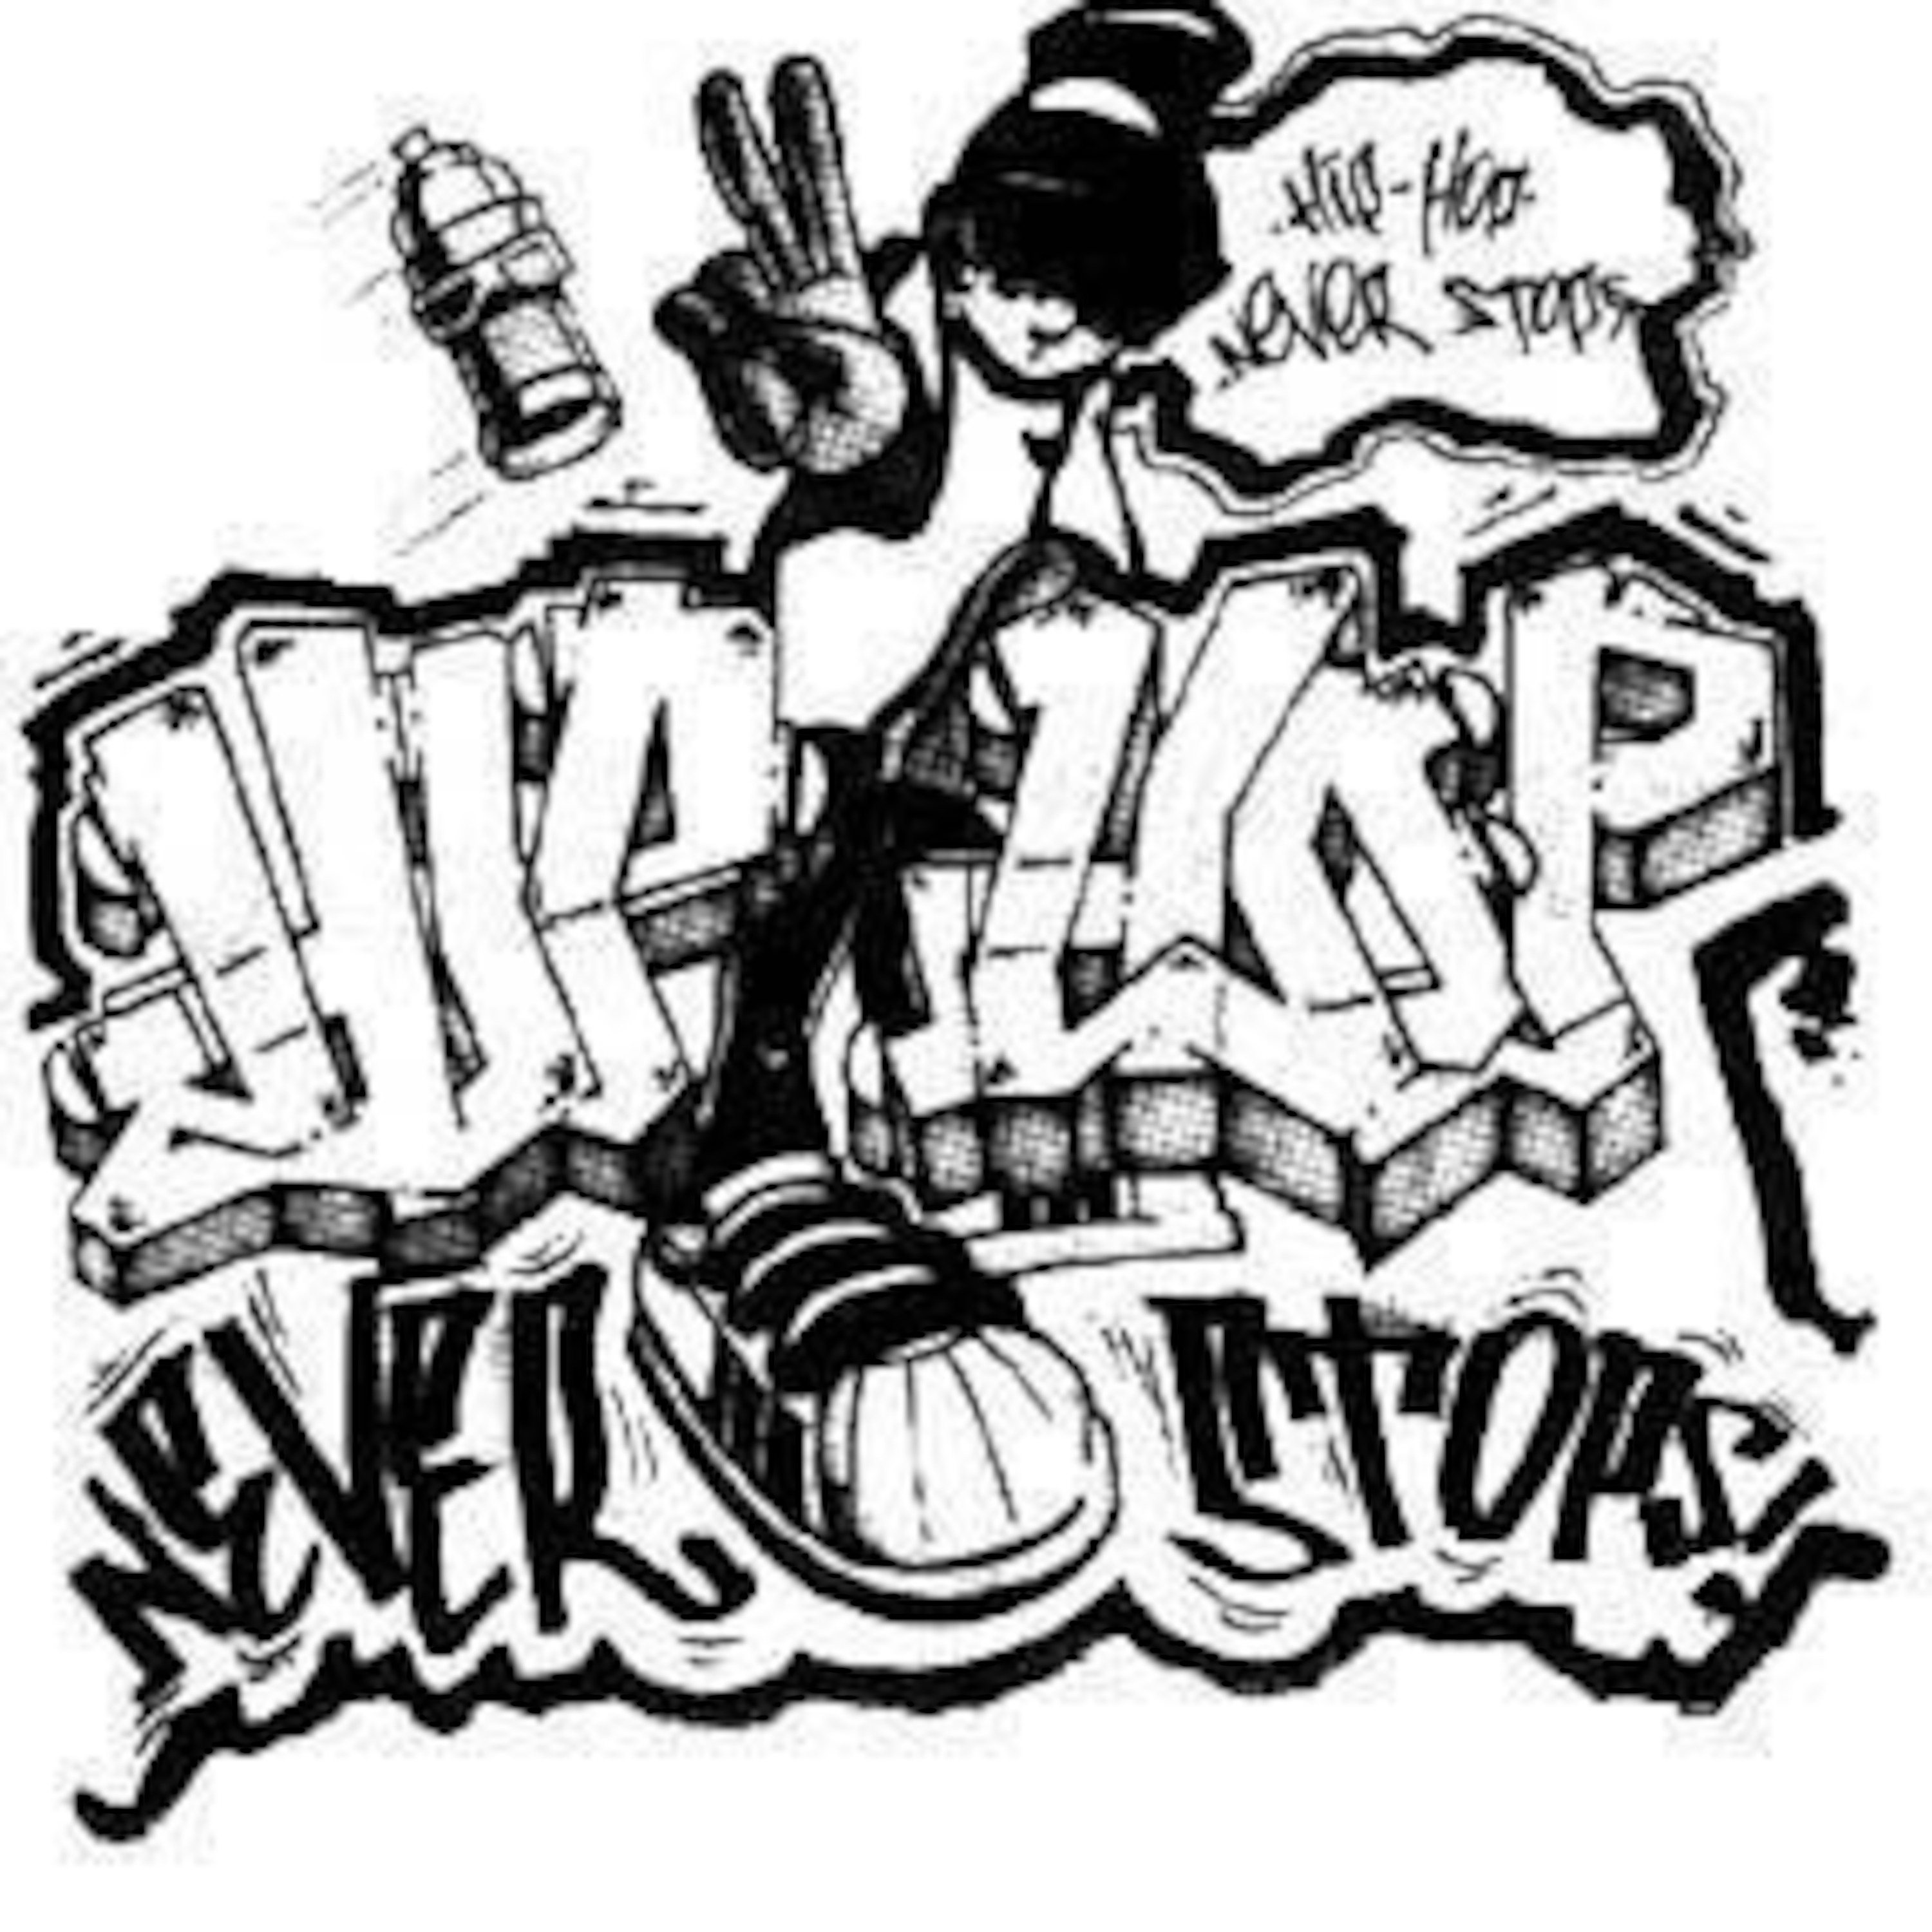 Граффити хип хоп культура